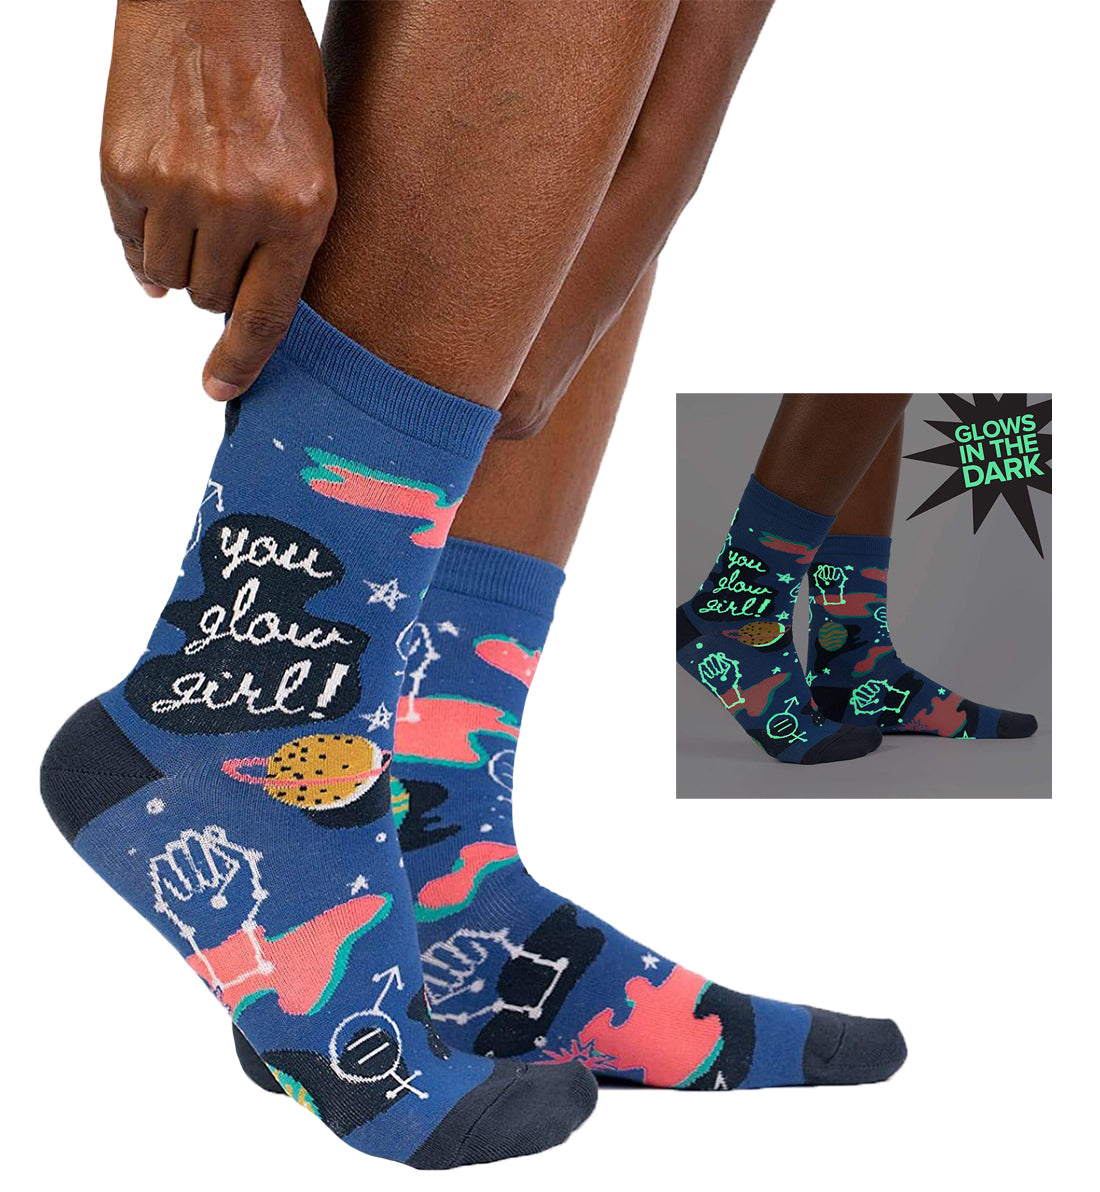 SOCK it to me Women's Crew Socks (w0246),You Glow Girl - You Glow Girl,One Size